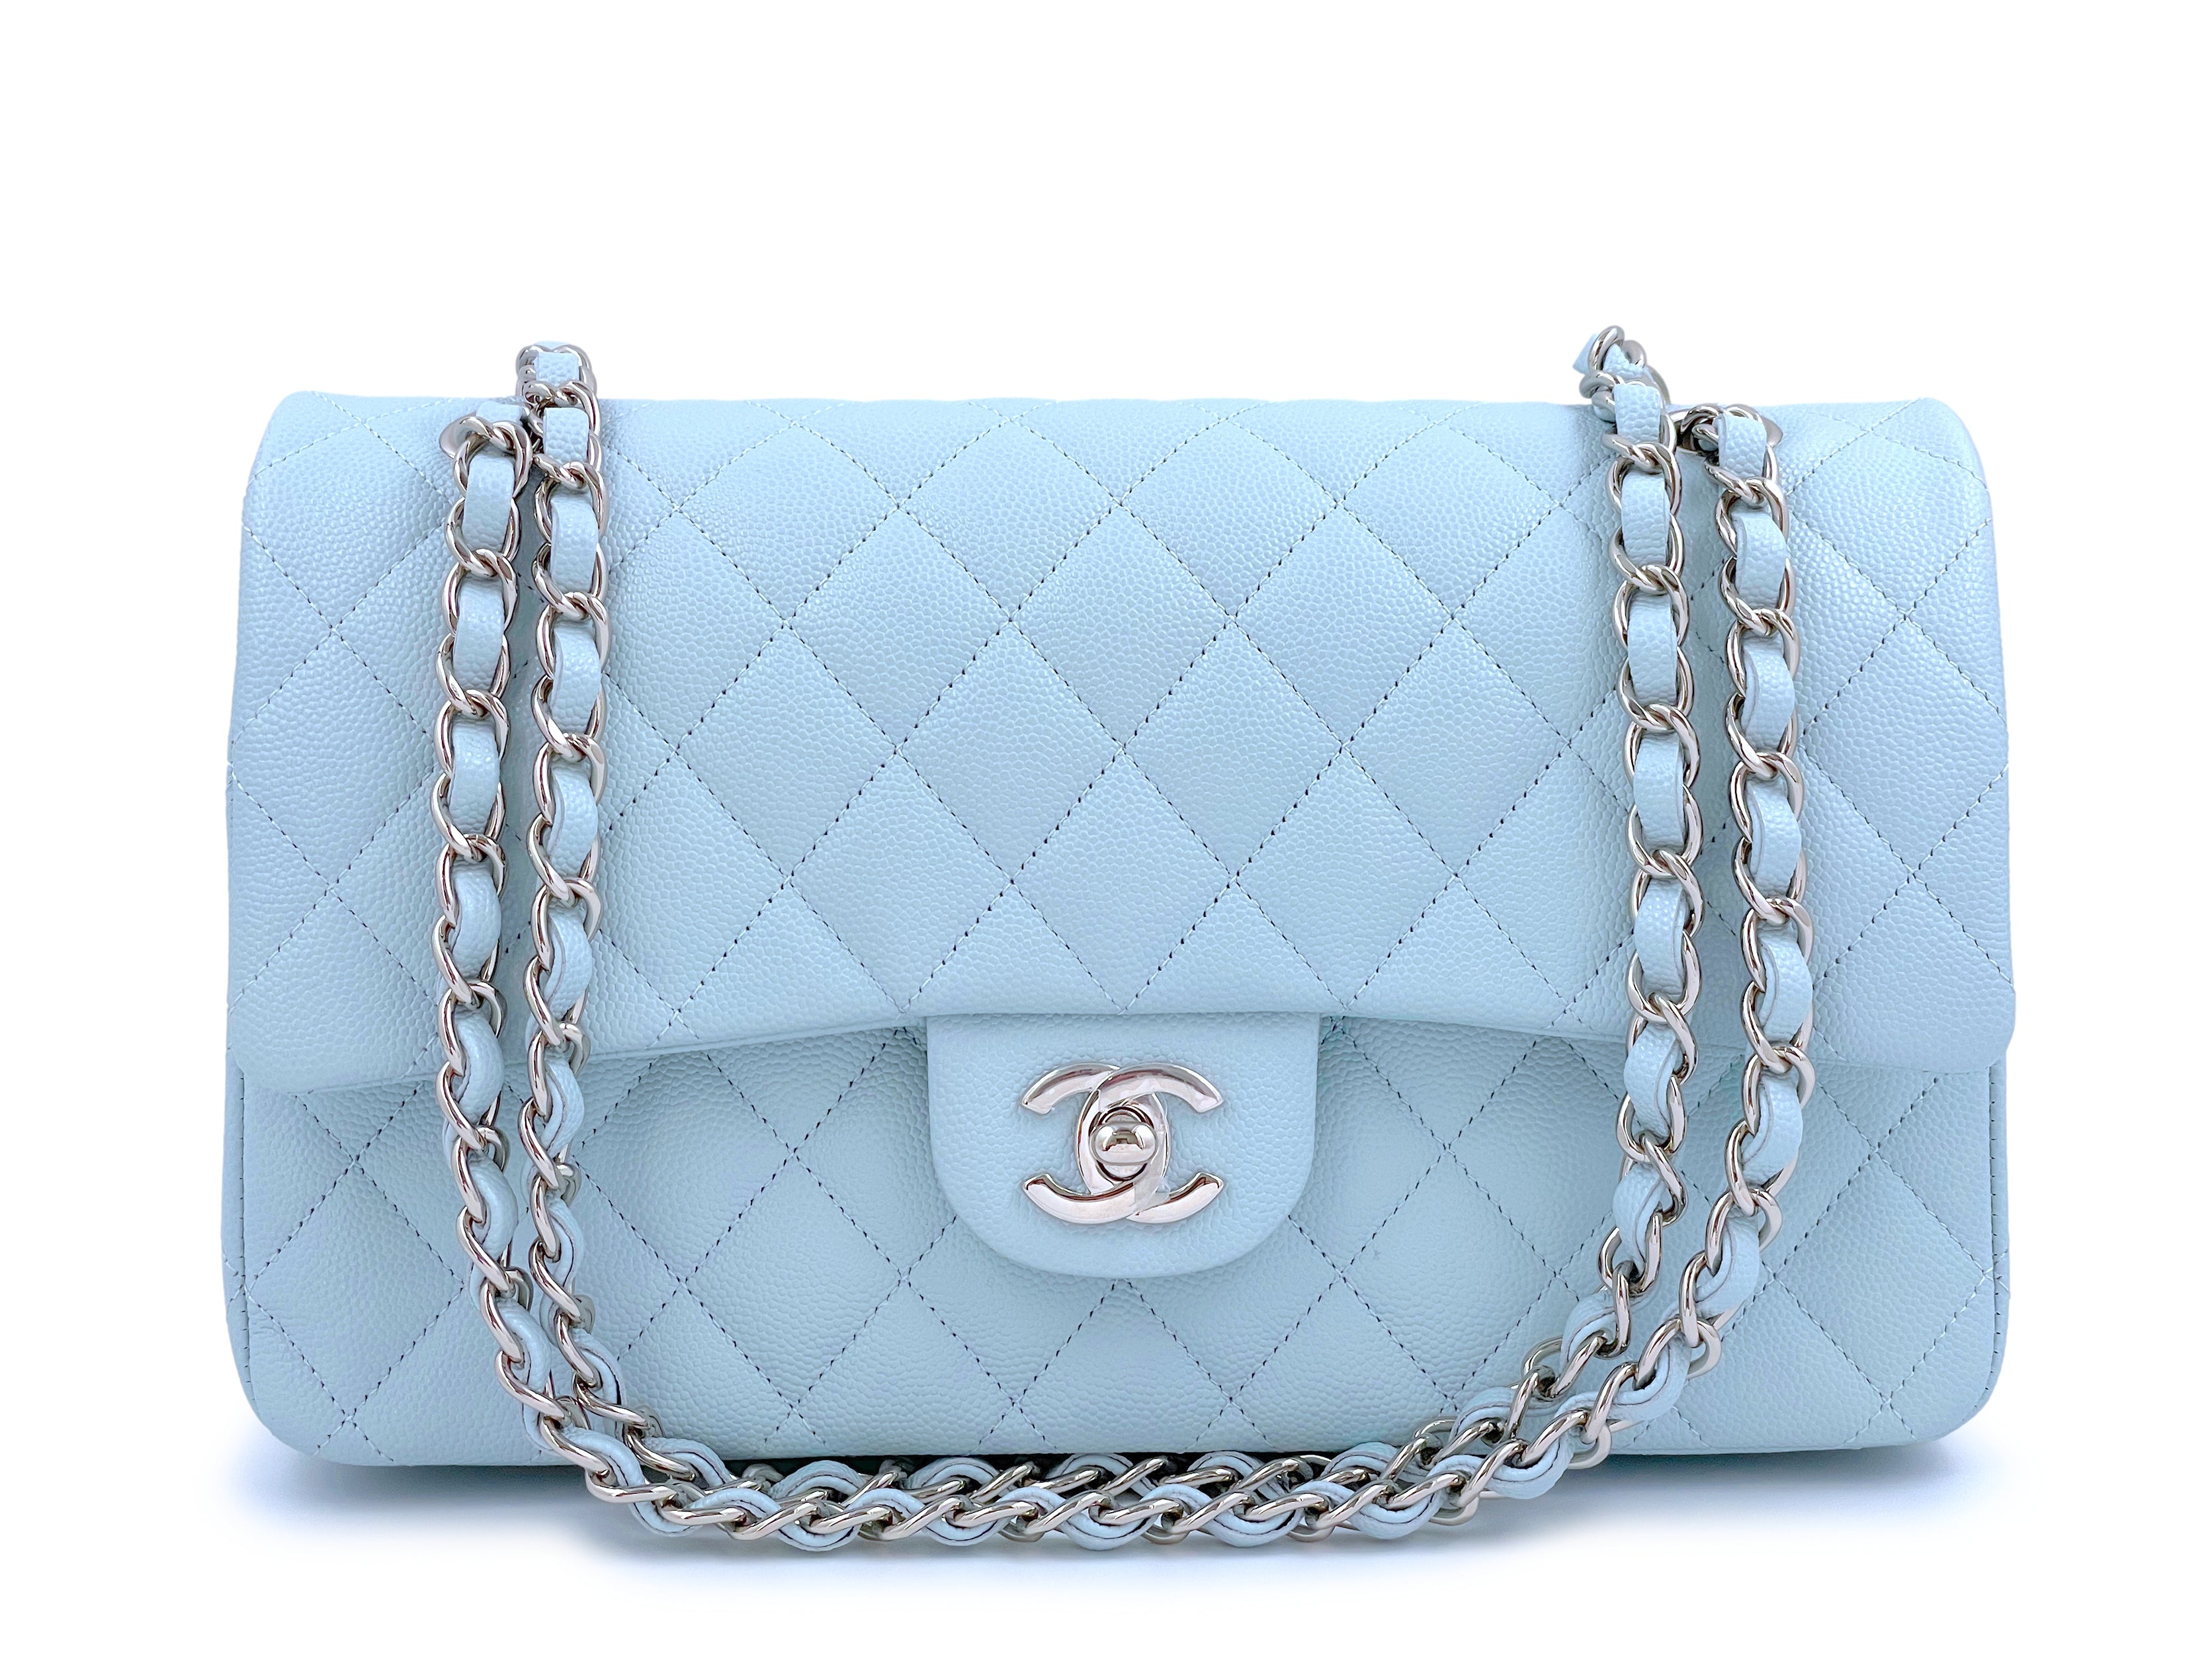 NIB 21K Chanel Light Pale Blue Caviar Classic Medium Double Flap